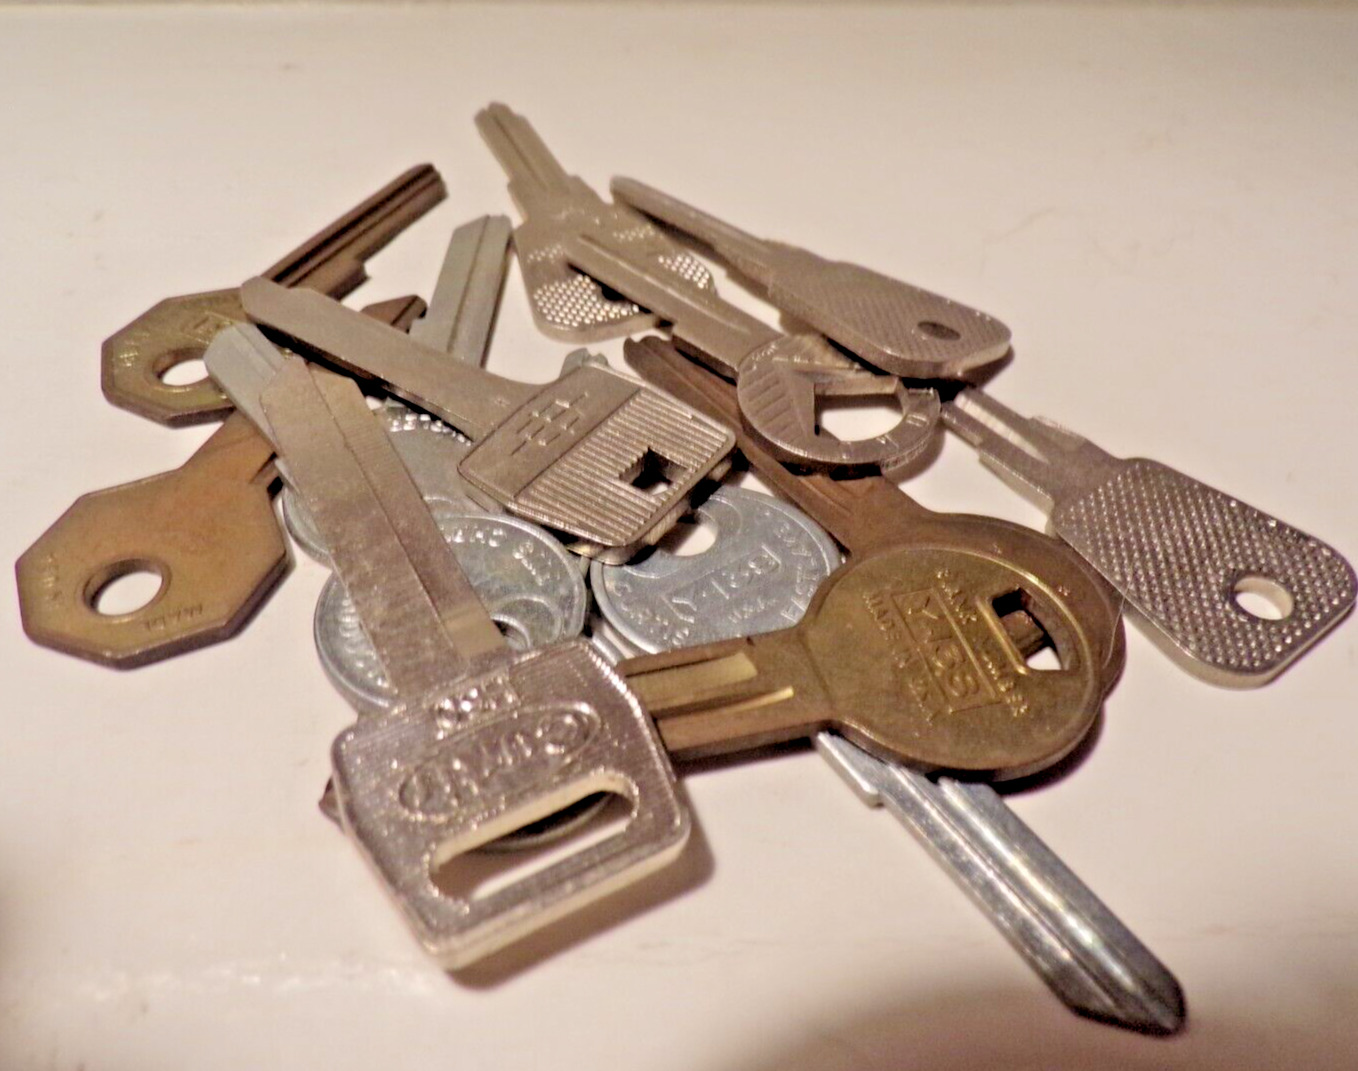 Lot of 15 Vintage Vehicle Keys Blanks Uncut Car Keys Old Car USA